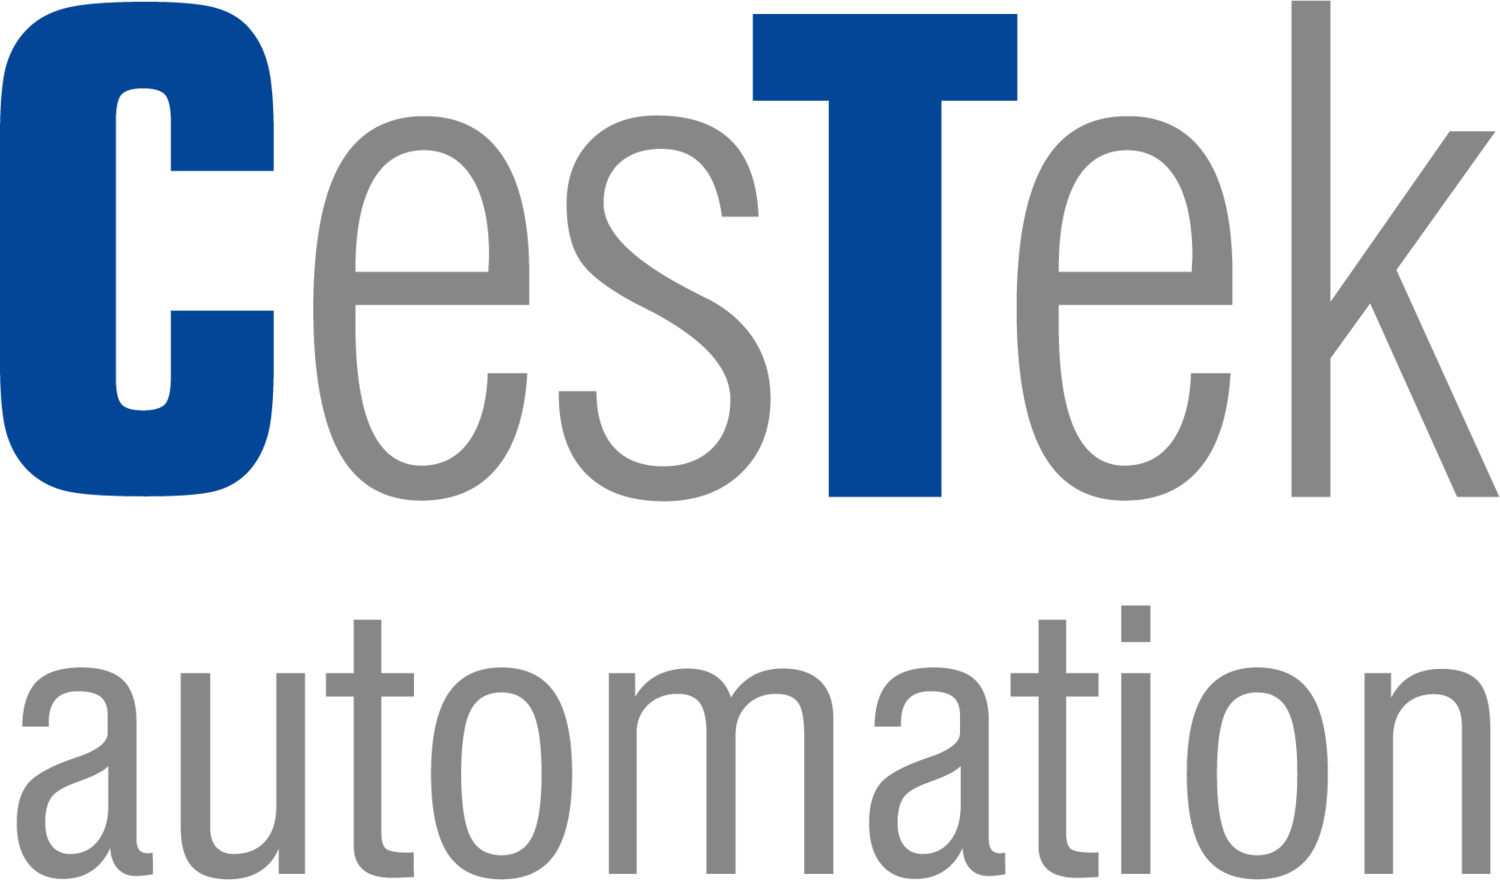 CesTek Automation